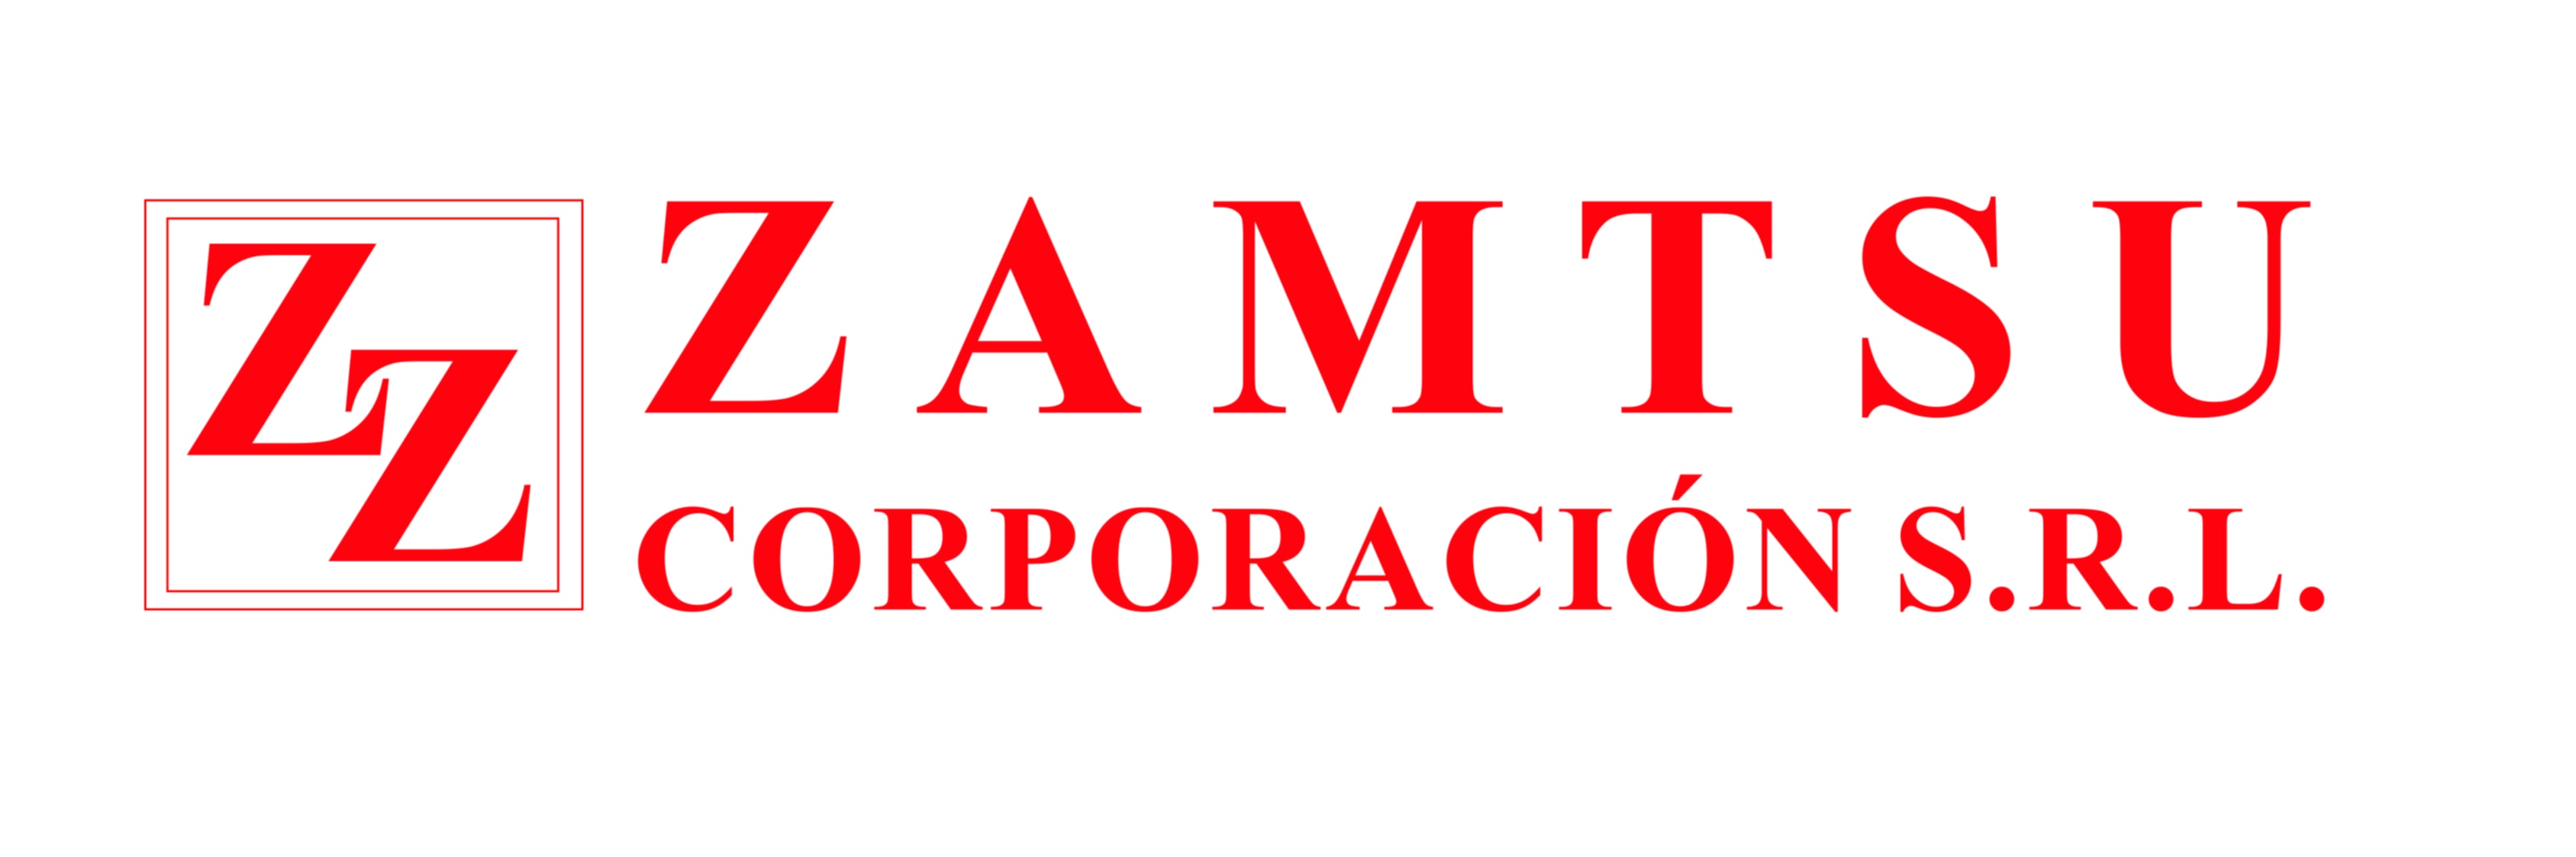 ZAMTSU logo